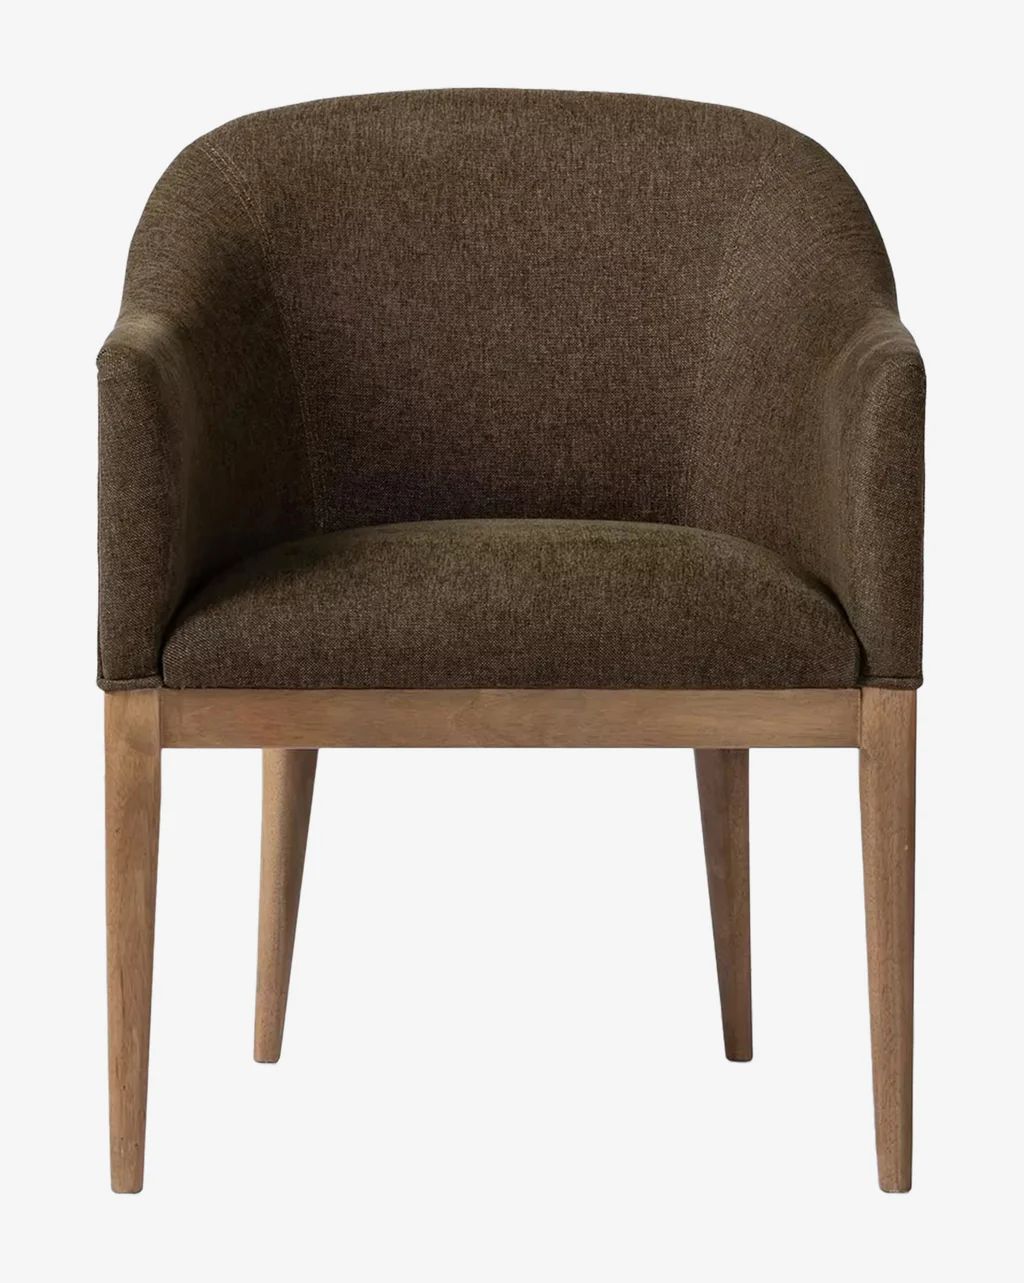 Paulette Chair | McGee & Co.